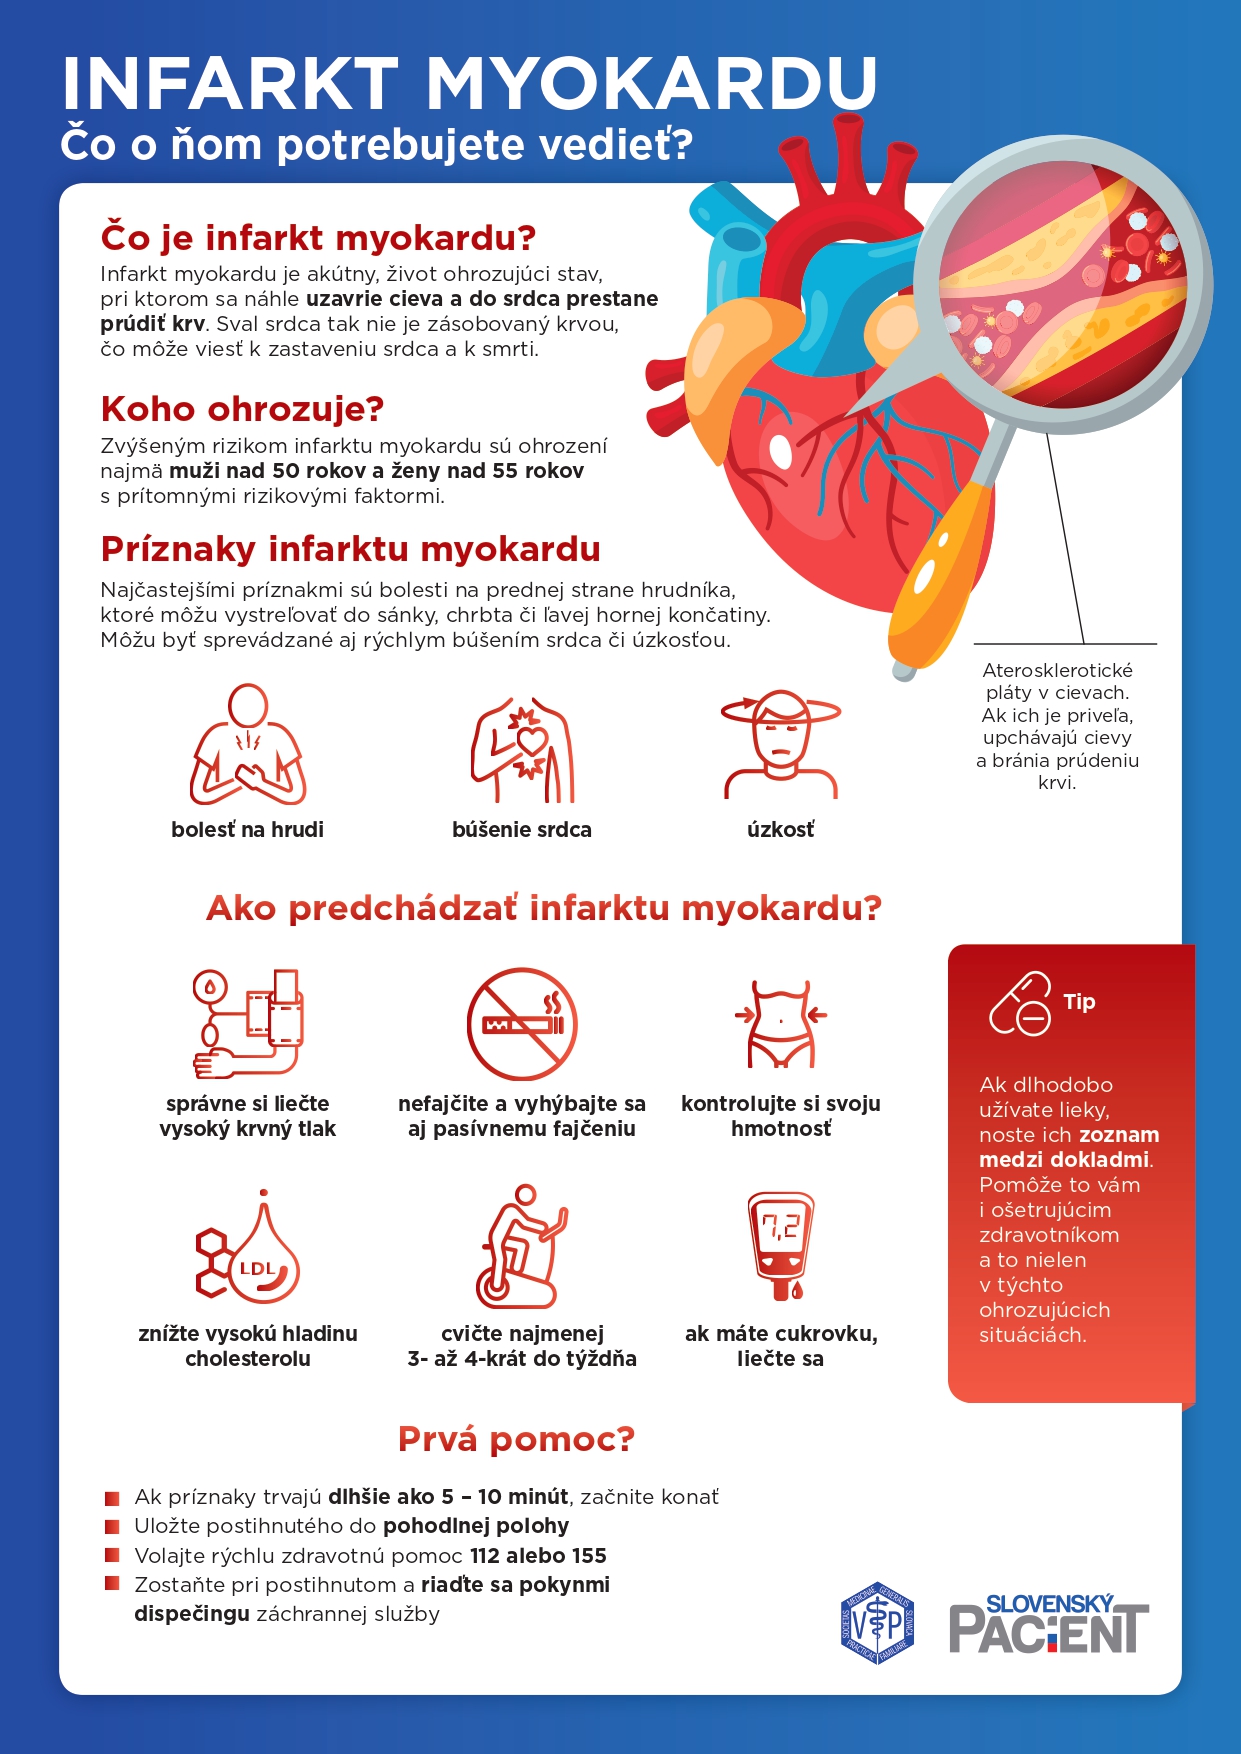 krvný tlak pri infarkte)